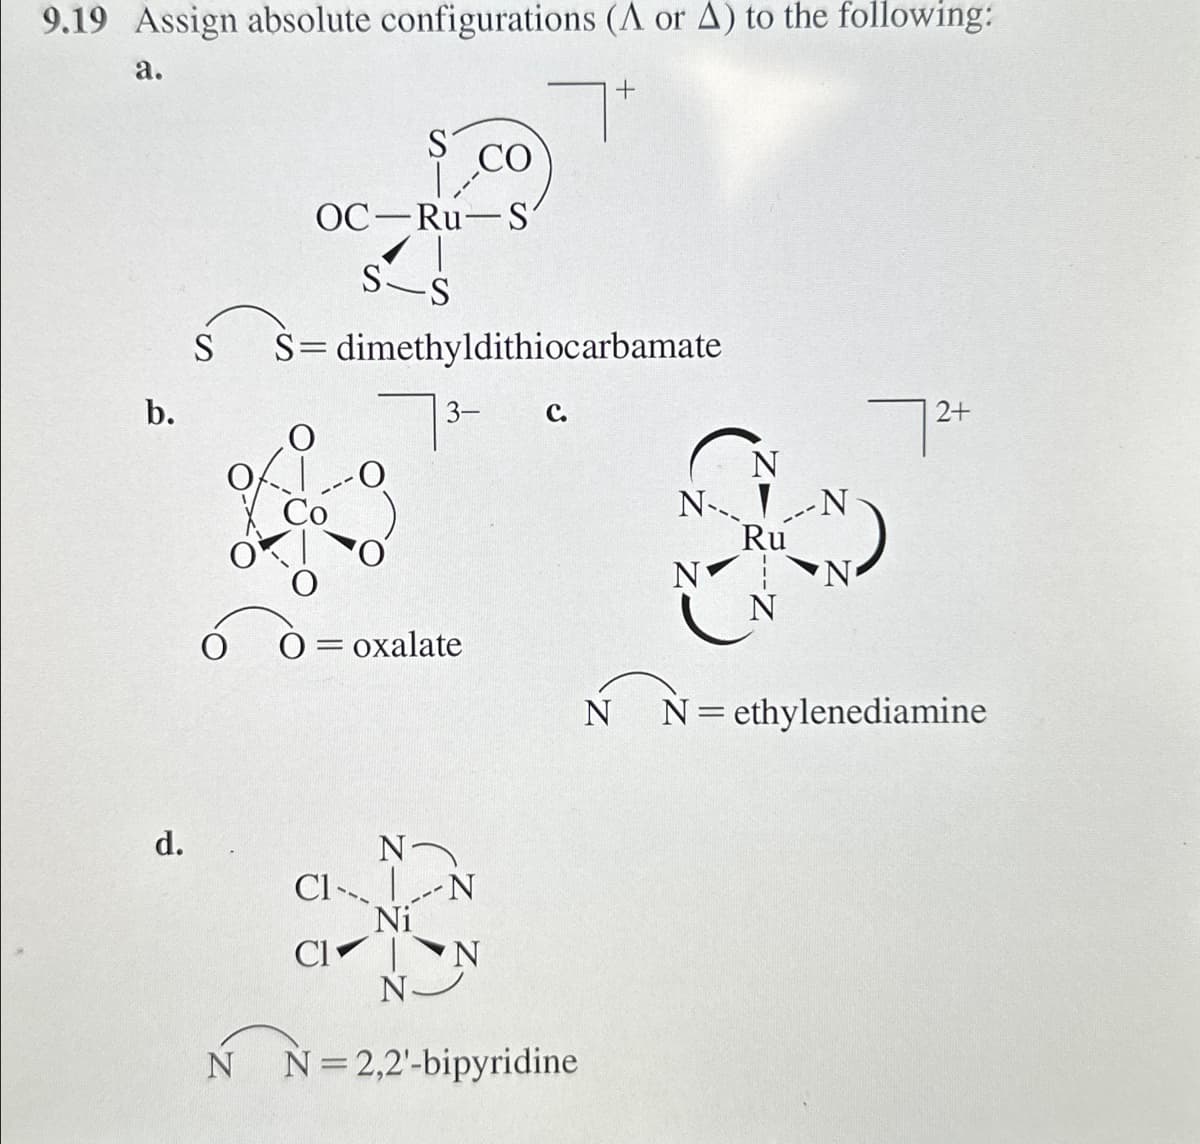 9.19 Assign absolute configurations (A or A) to the following:
a.
S
b.
CO
OC Ru-S'
S-S
+
S-dimethyldithiocarbamate
3-
C.
d.
O = oxalate
N
Cl N
Ni
Cl
N
N N=2,2'-bipyridine
N
7 2+
N
N-
Ru
N
N
=
N ethylenediamine